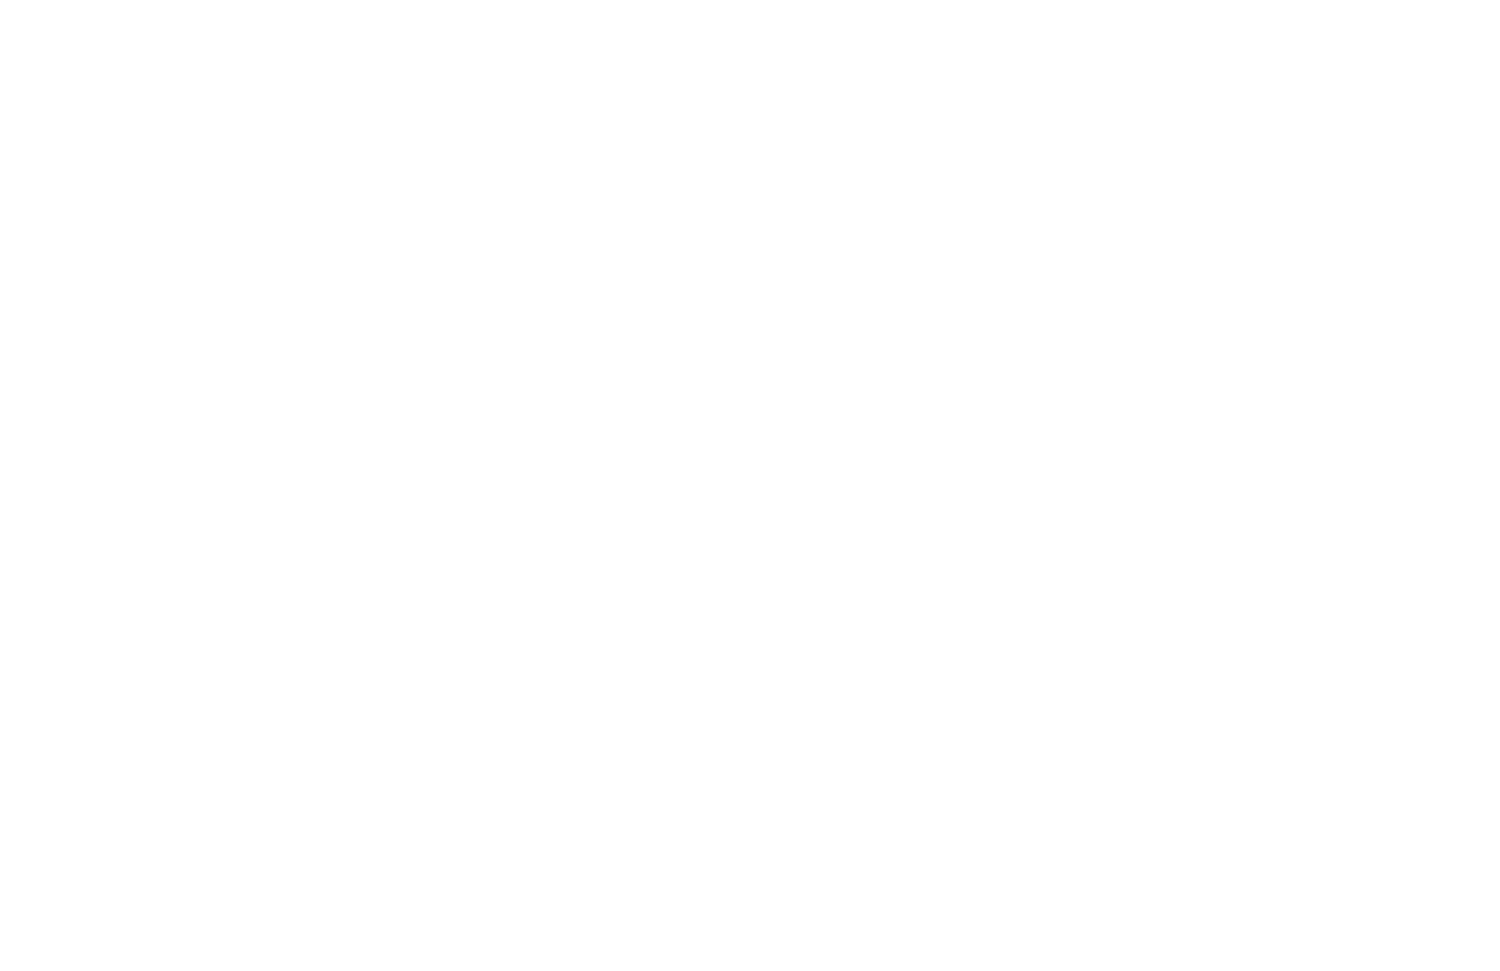 Public Wine